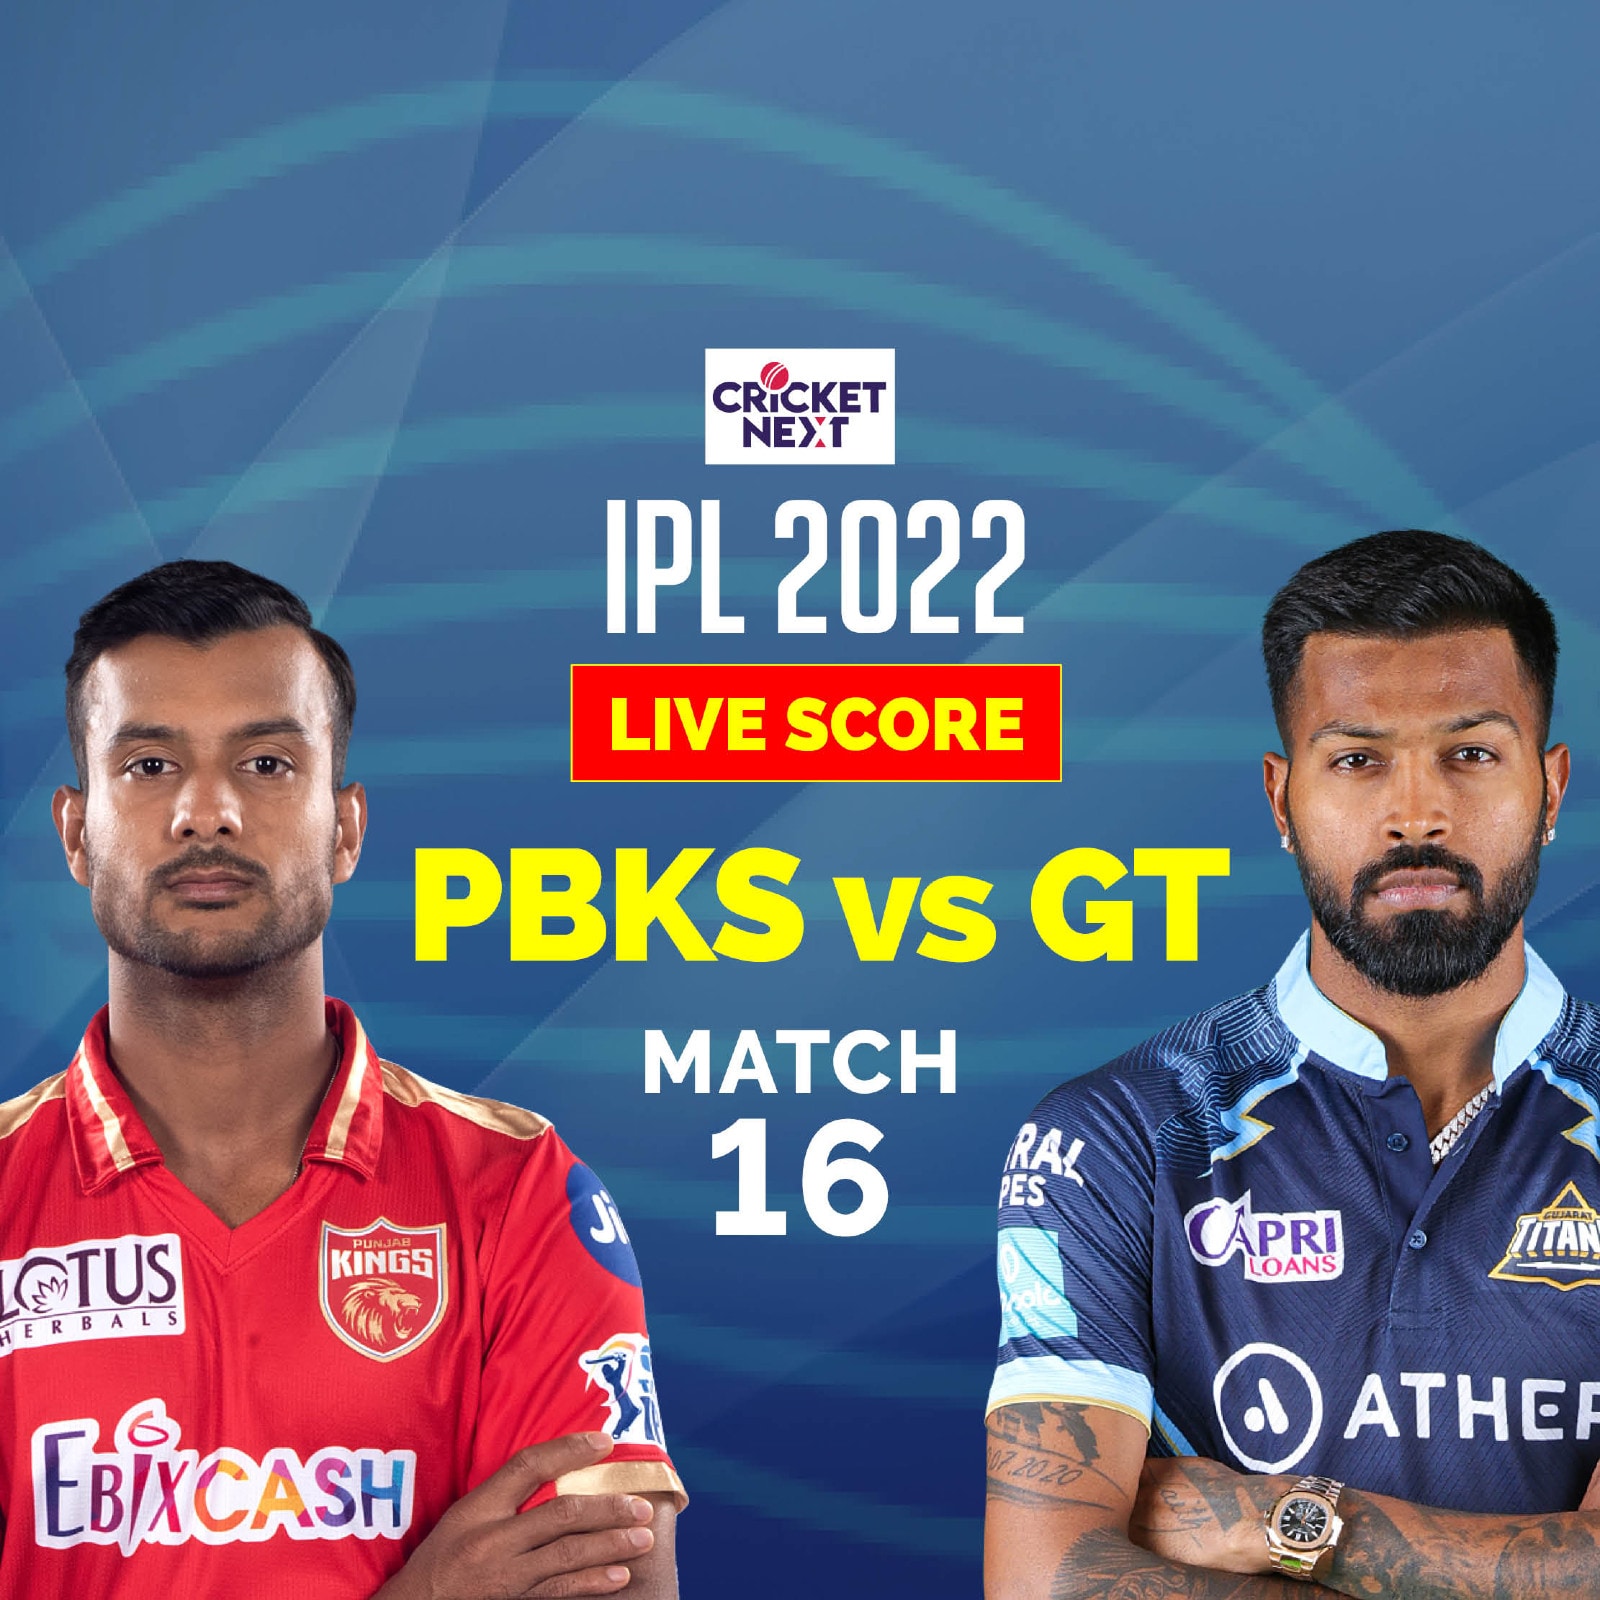 ipl live cricket match 2022